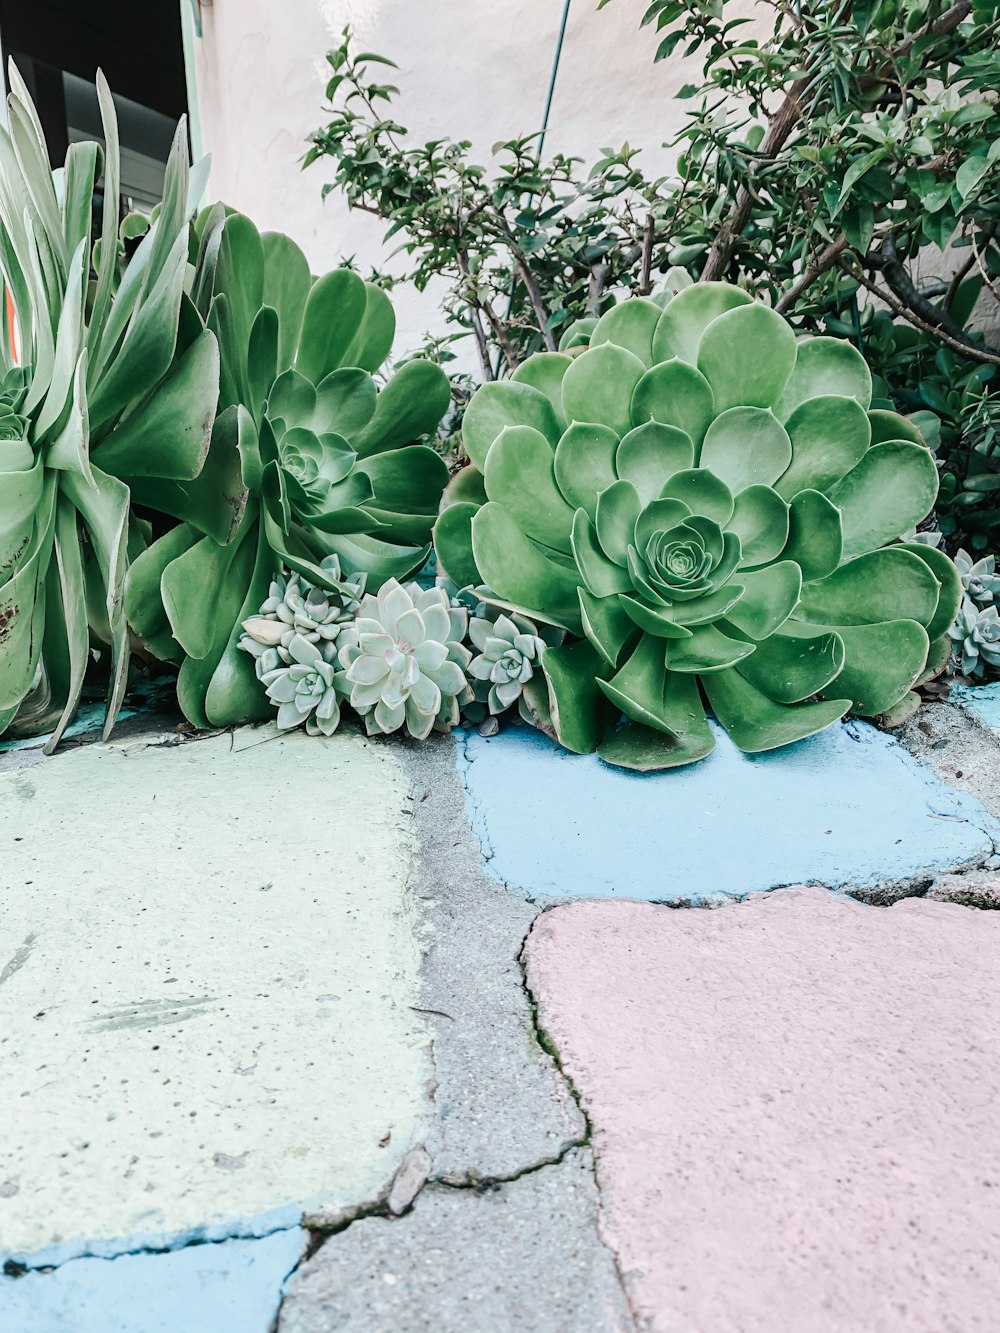 green succulent plants on gray concrete floor